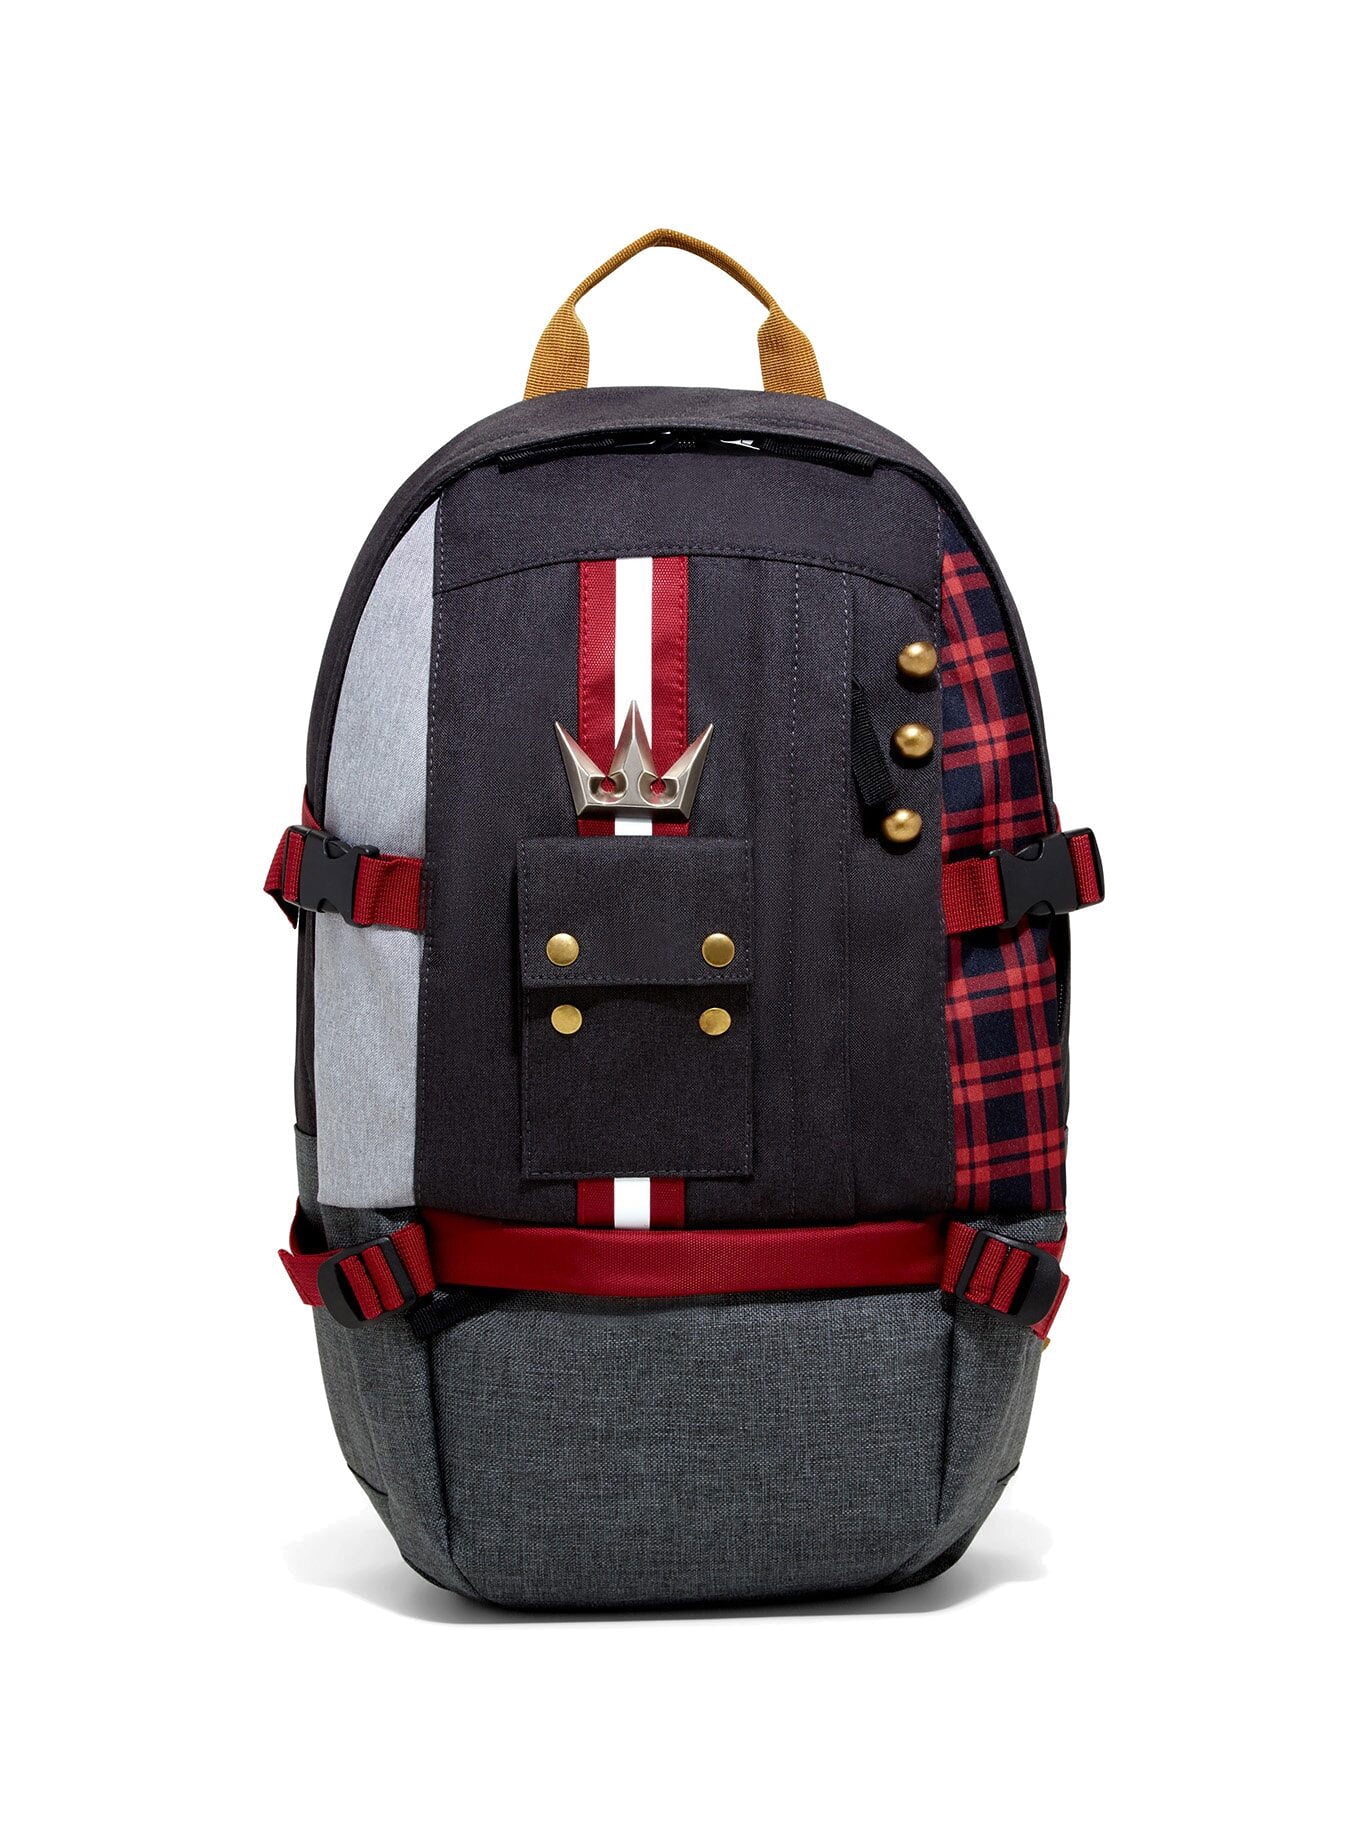 Kingdom Hearts Backpack Navy Blue and Grey Gamer Backpack Red 